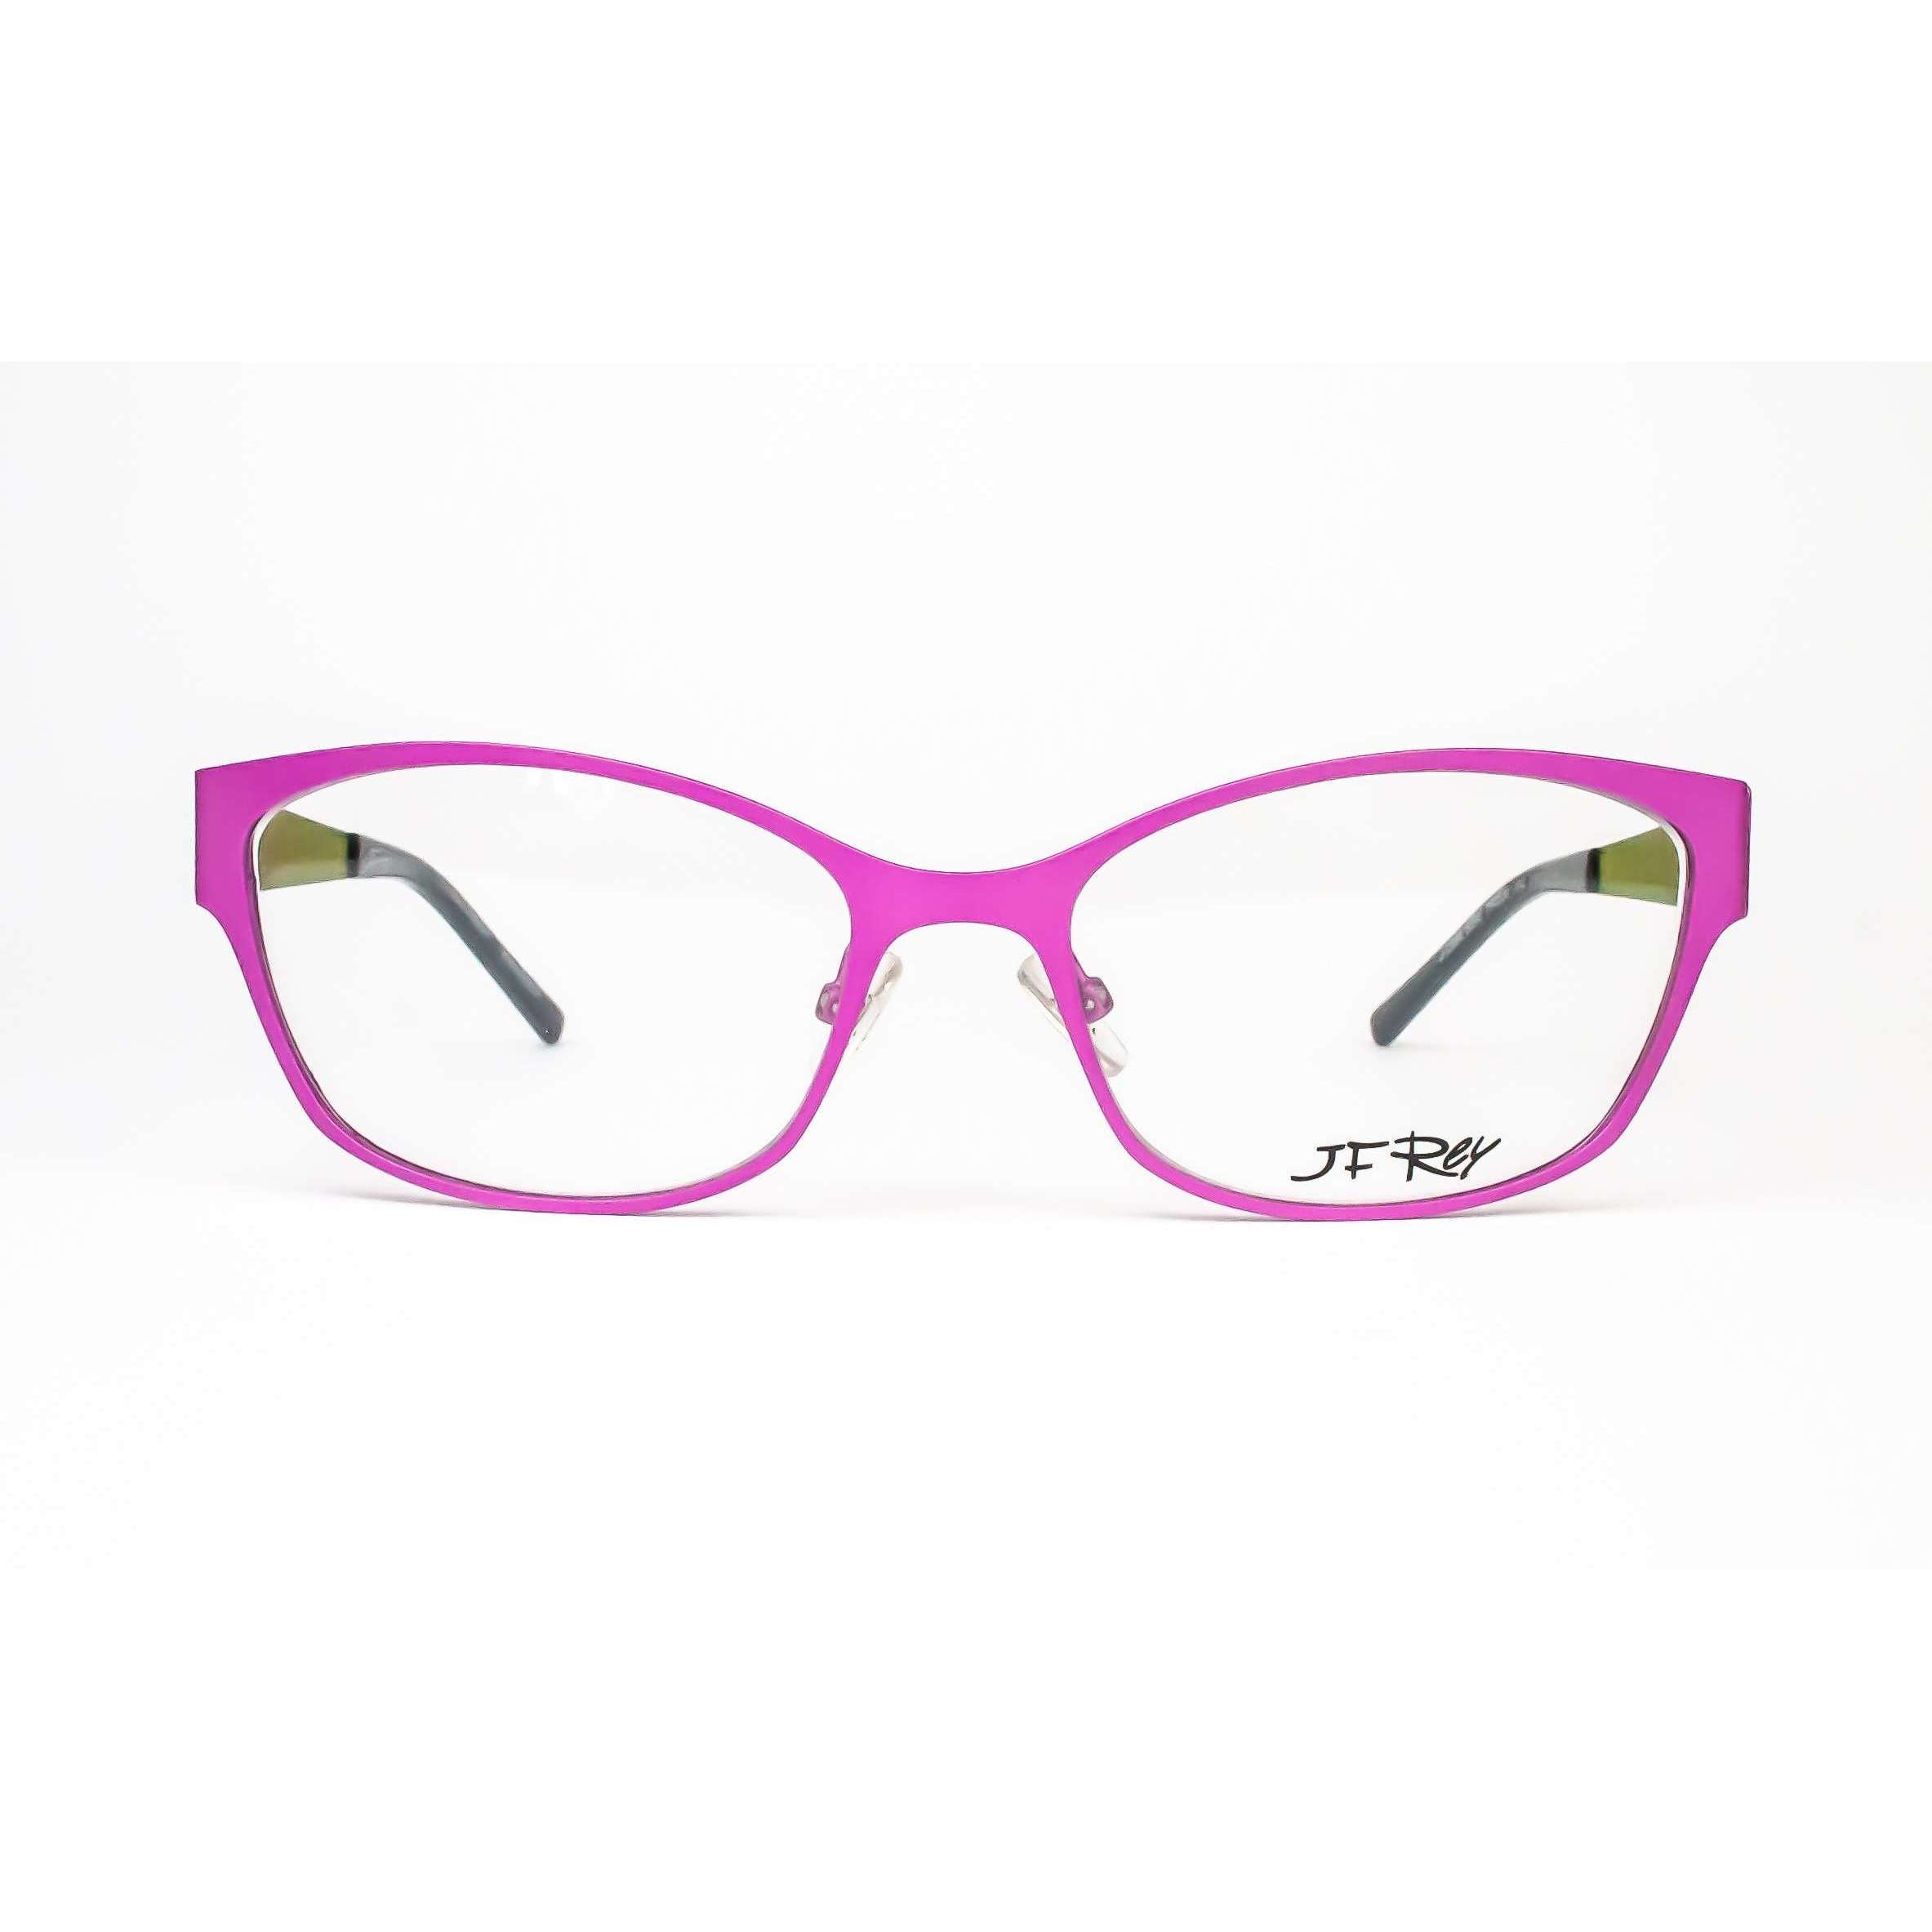 JF Rey Model 2588 Pink Cat Eye Metal Glasses